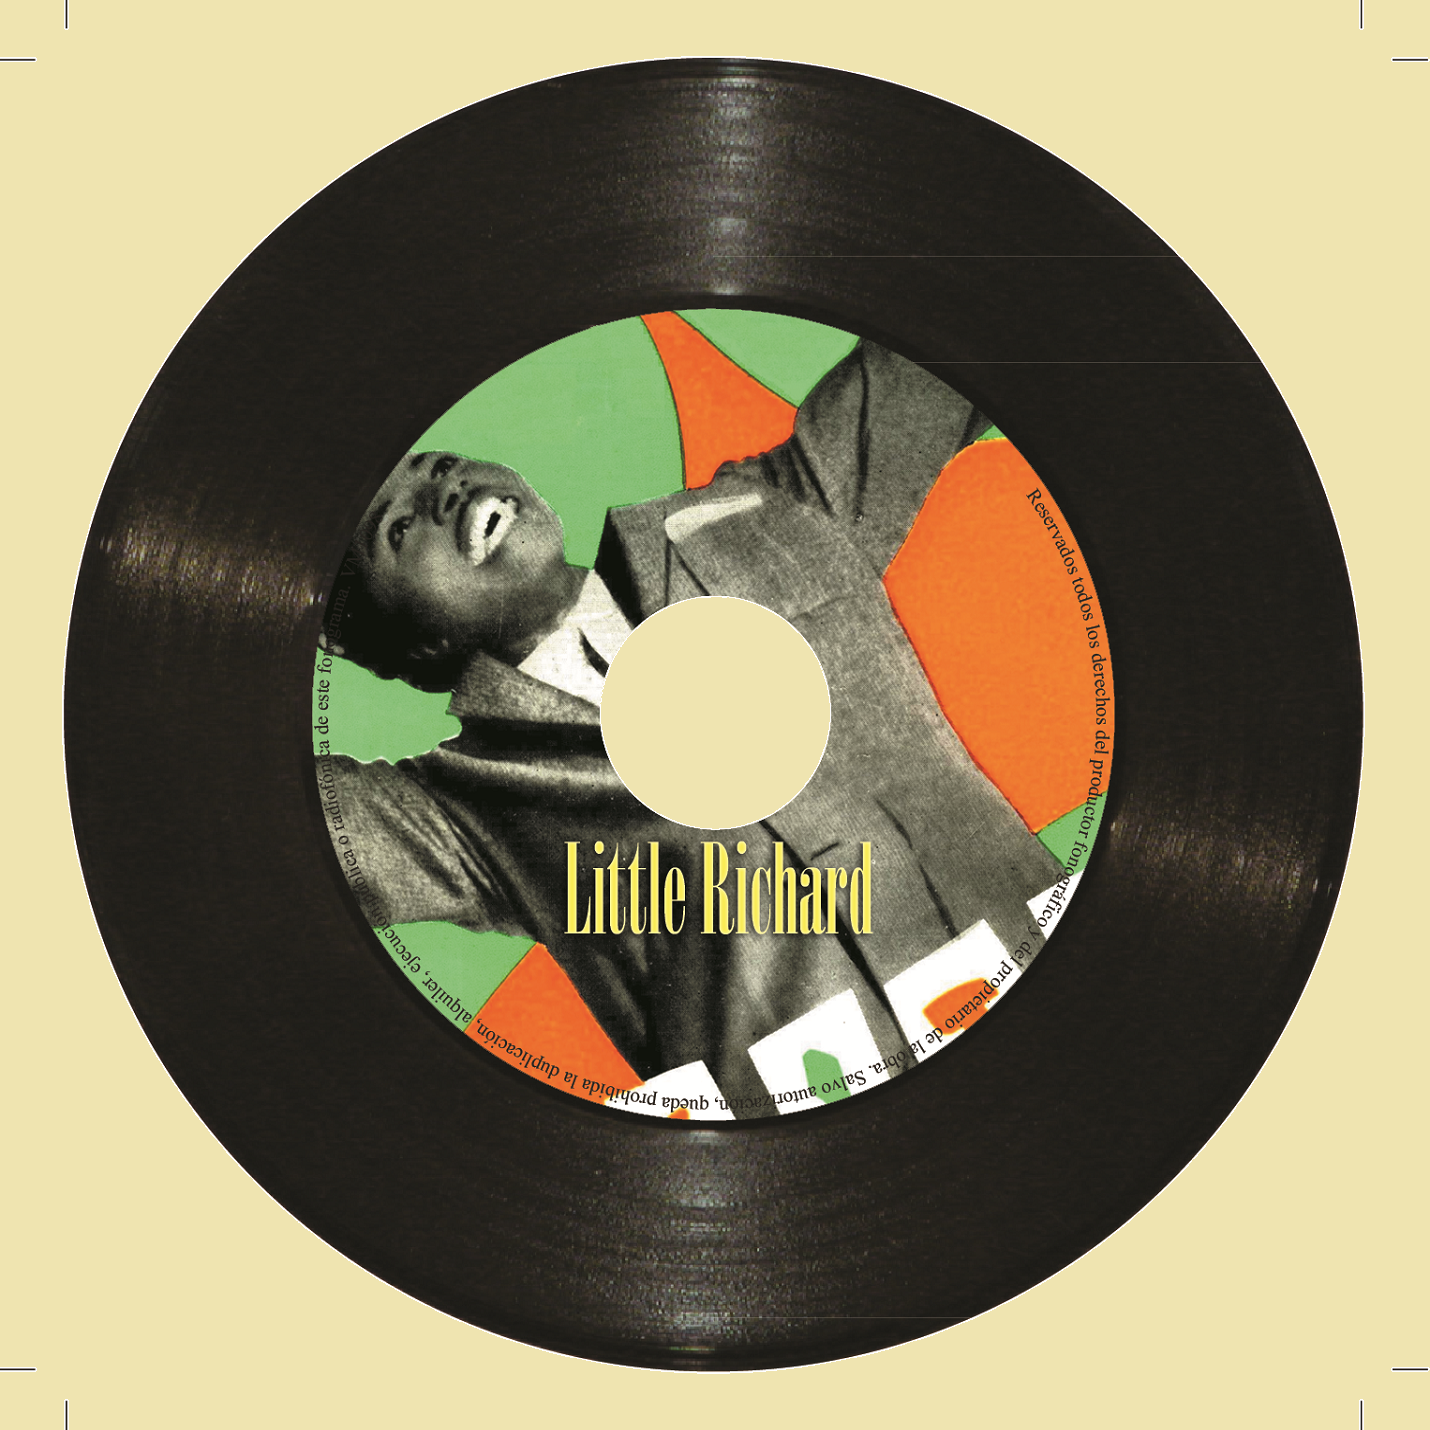 Little Richard (Colección Vintage Music)